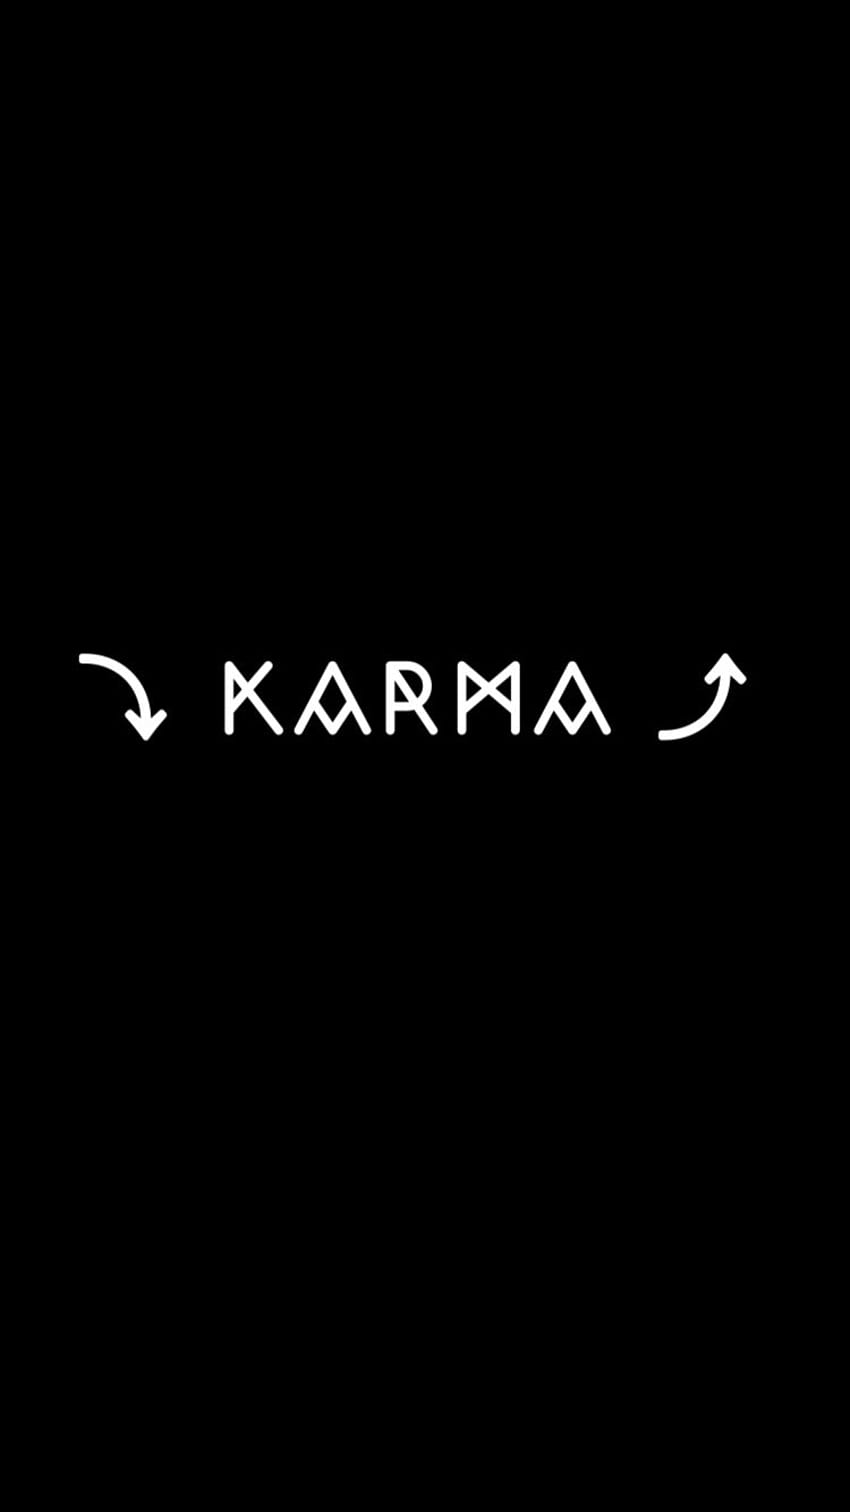 karma WALLPEPER, logo karma wallpaper ponsel HD